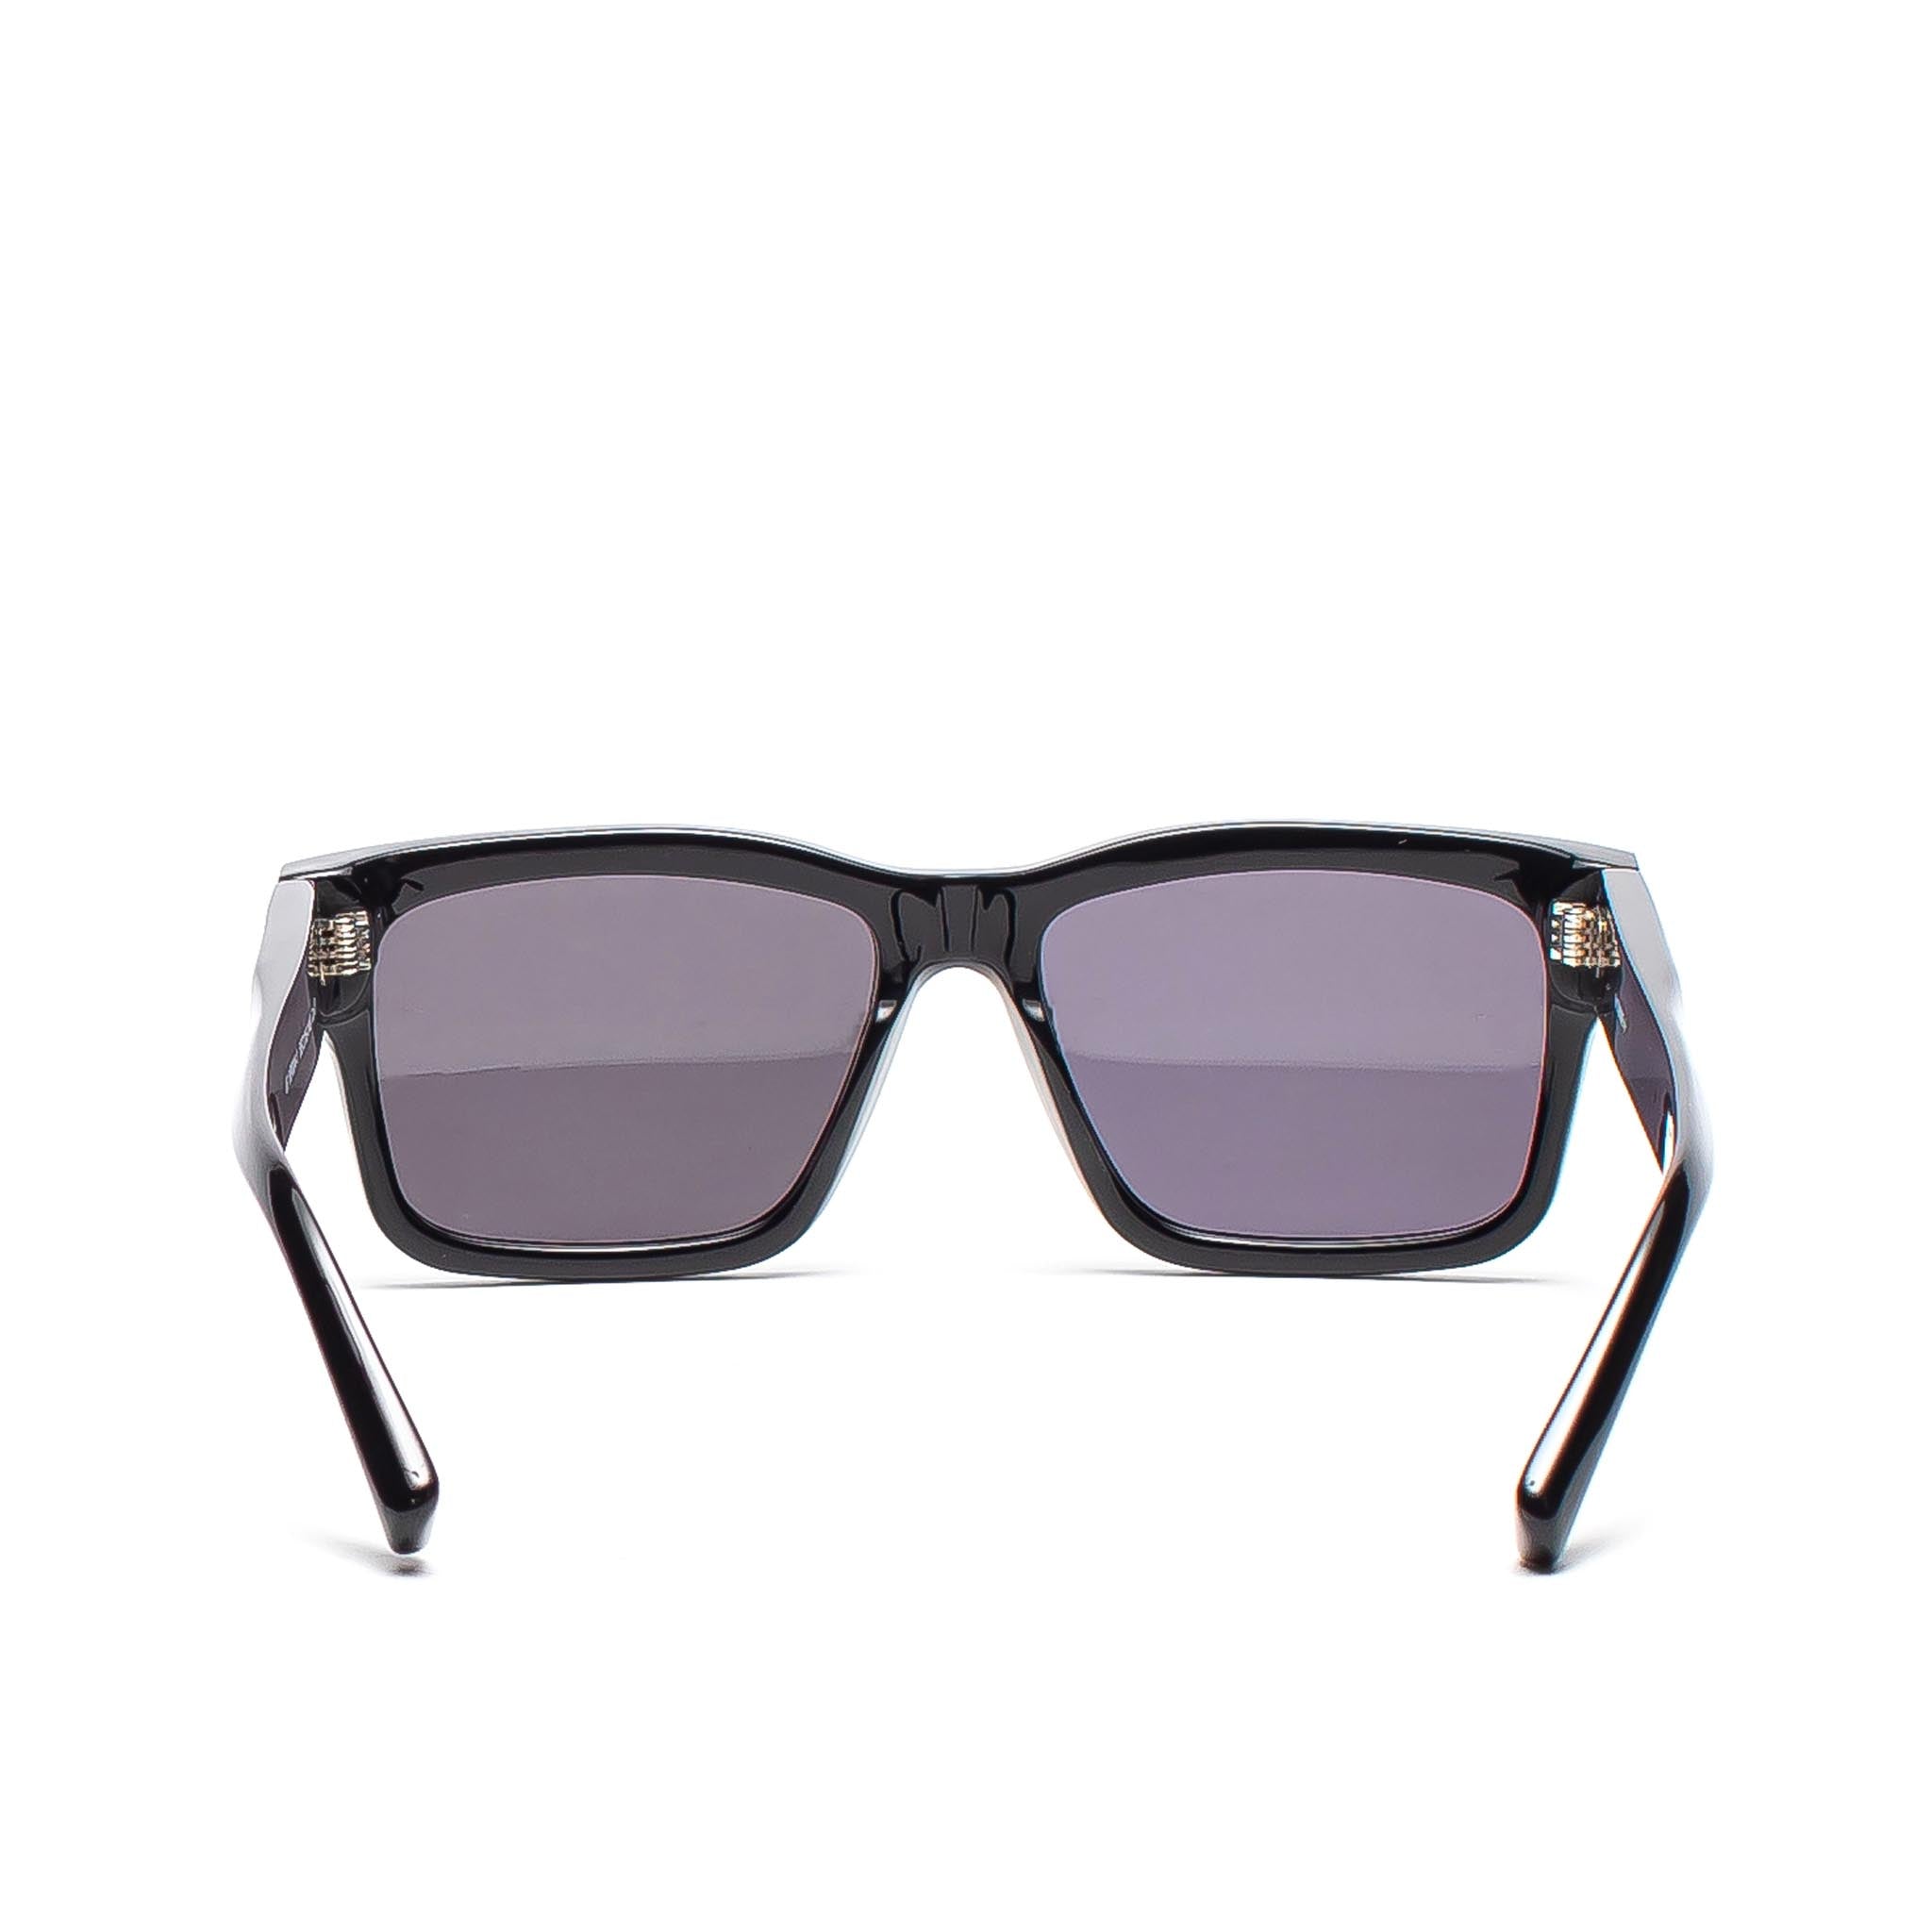 HOMME+ HP004 Sunglasses Black